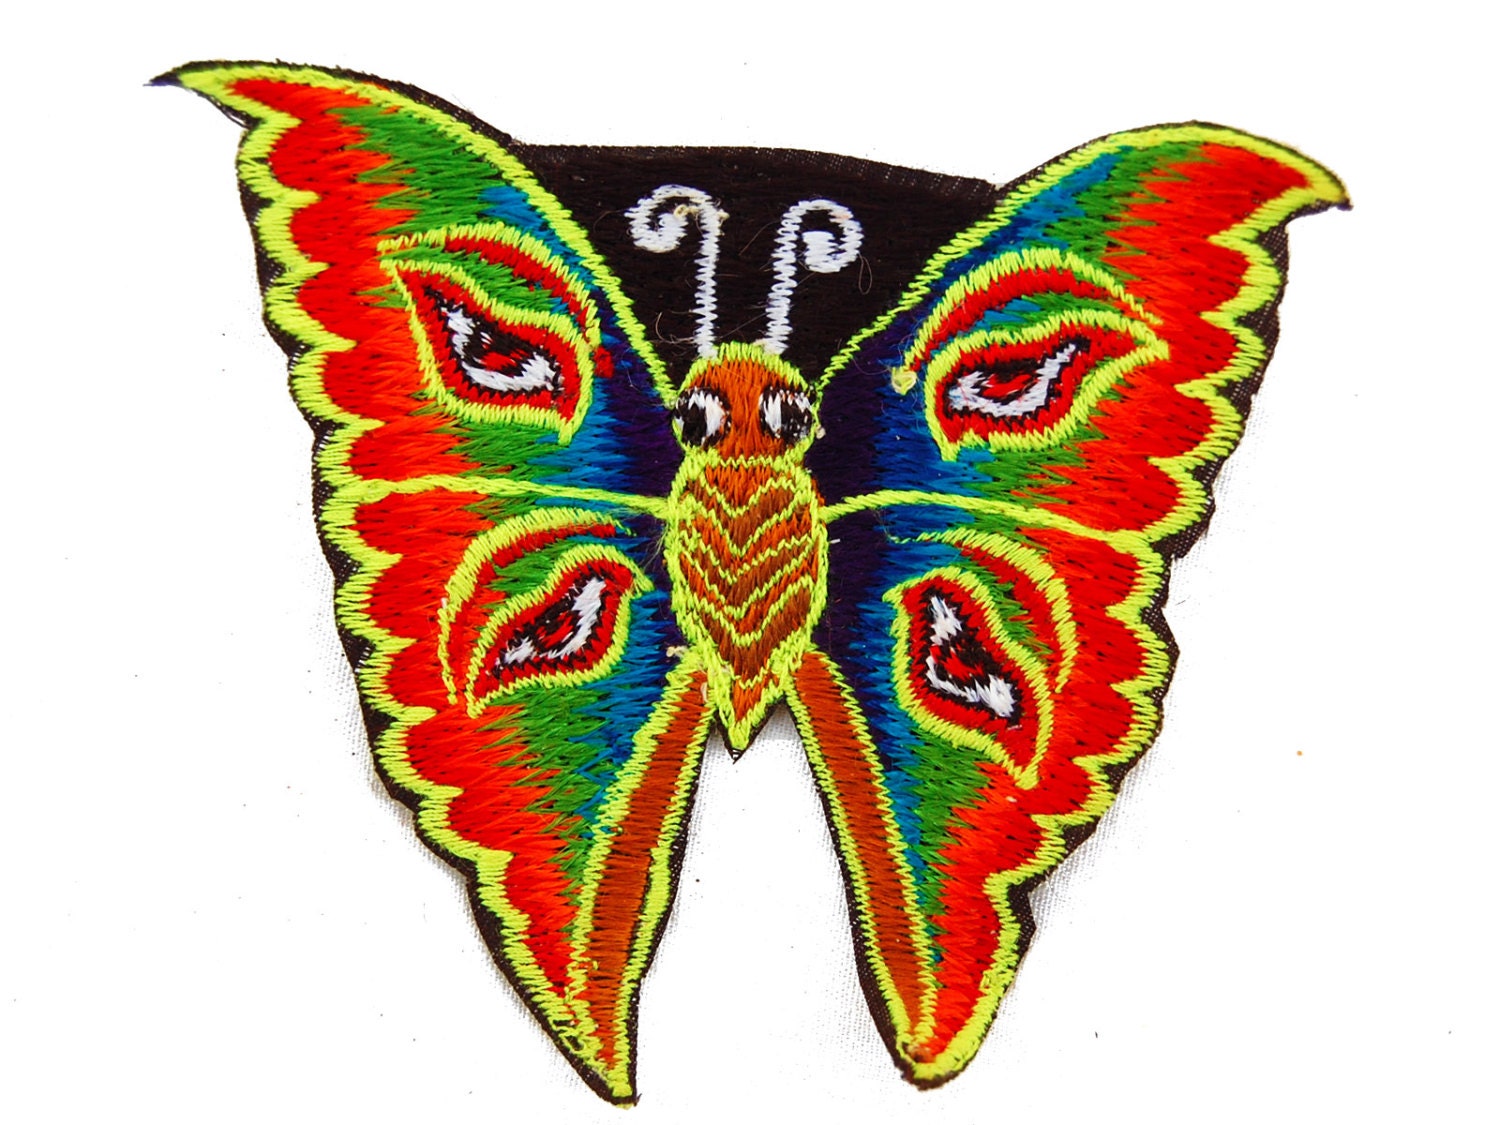 Rainbow Butterfly Buddha Eyes embroidery patch small size Goa Trance psychedelic consciousness beauty Psytrance Art handmade blacklight UV